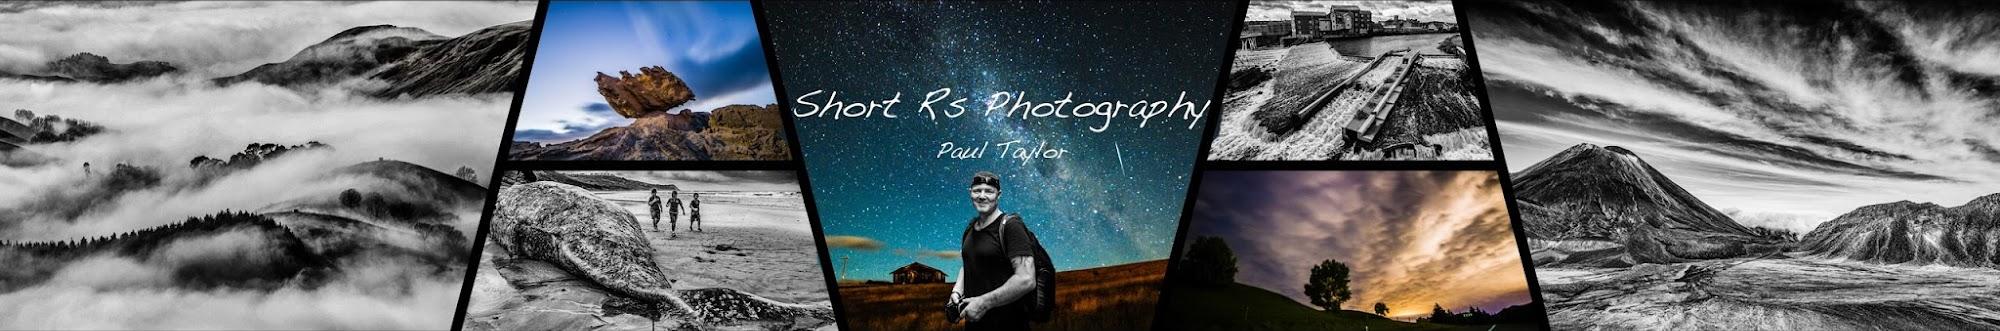 Paul Taylor Photography